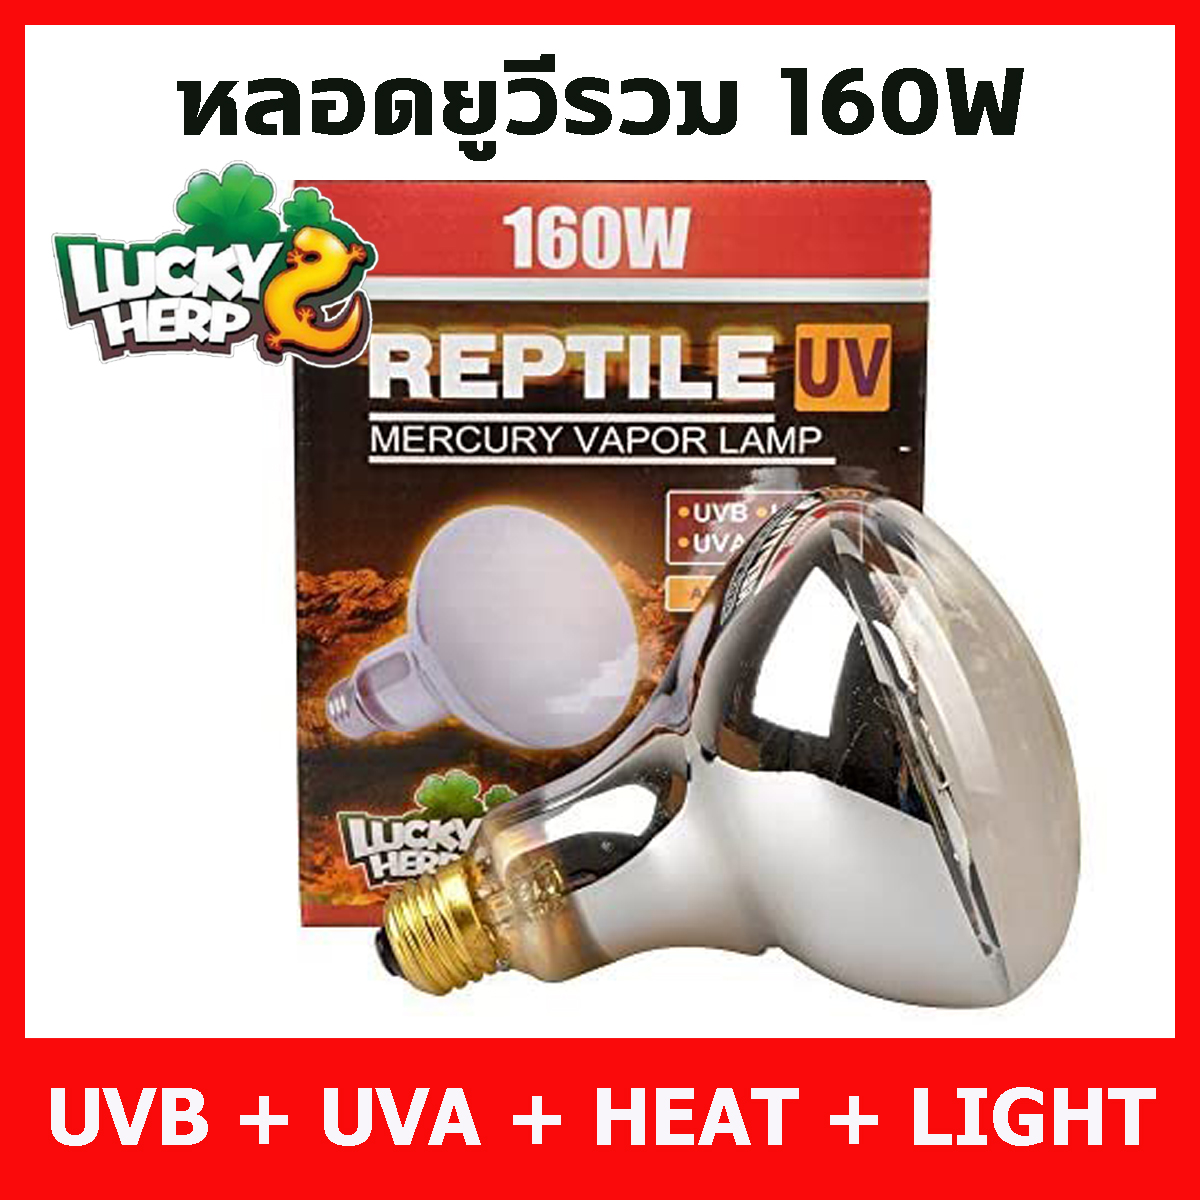 Lucky Herp Reptile UVA UVB Heat Lamp 160W หลอดรวมยูวีและความร้อน ครบทุกอย่างในหลอดเดียว สำหรับสัตว์เลื้อยคลานและสัตว์ชนิดต่างๆที่ต้องการยูวี หลอดไฟ ยูวี